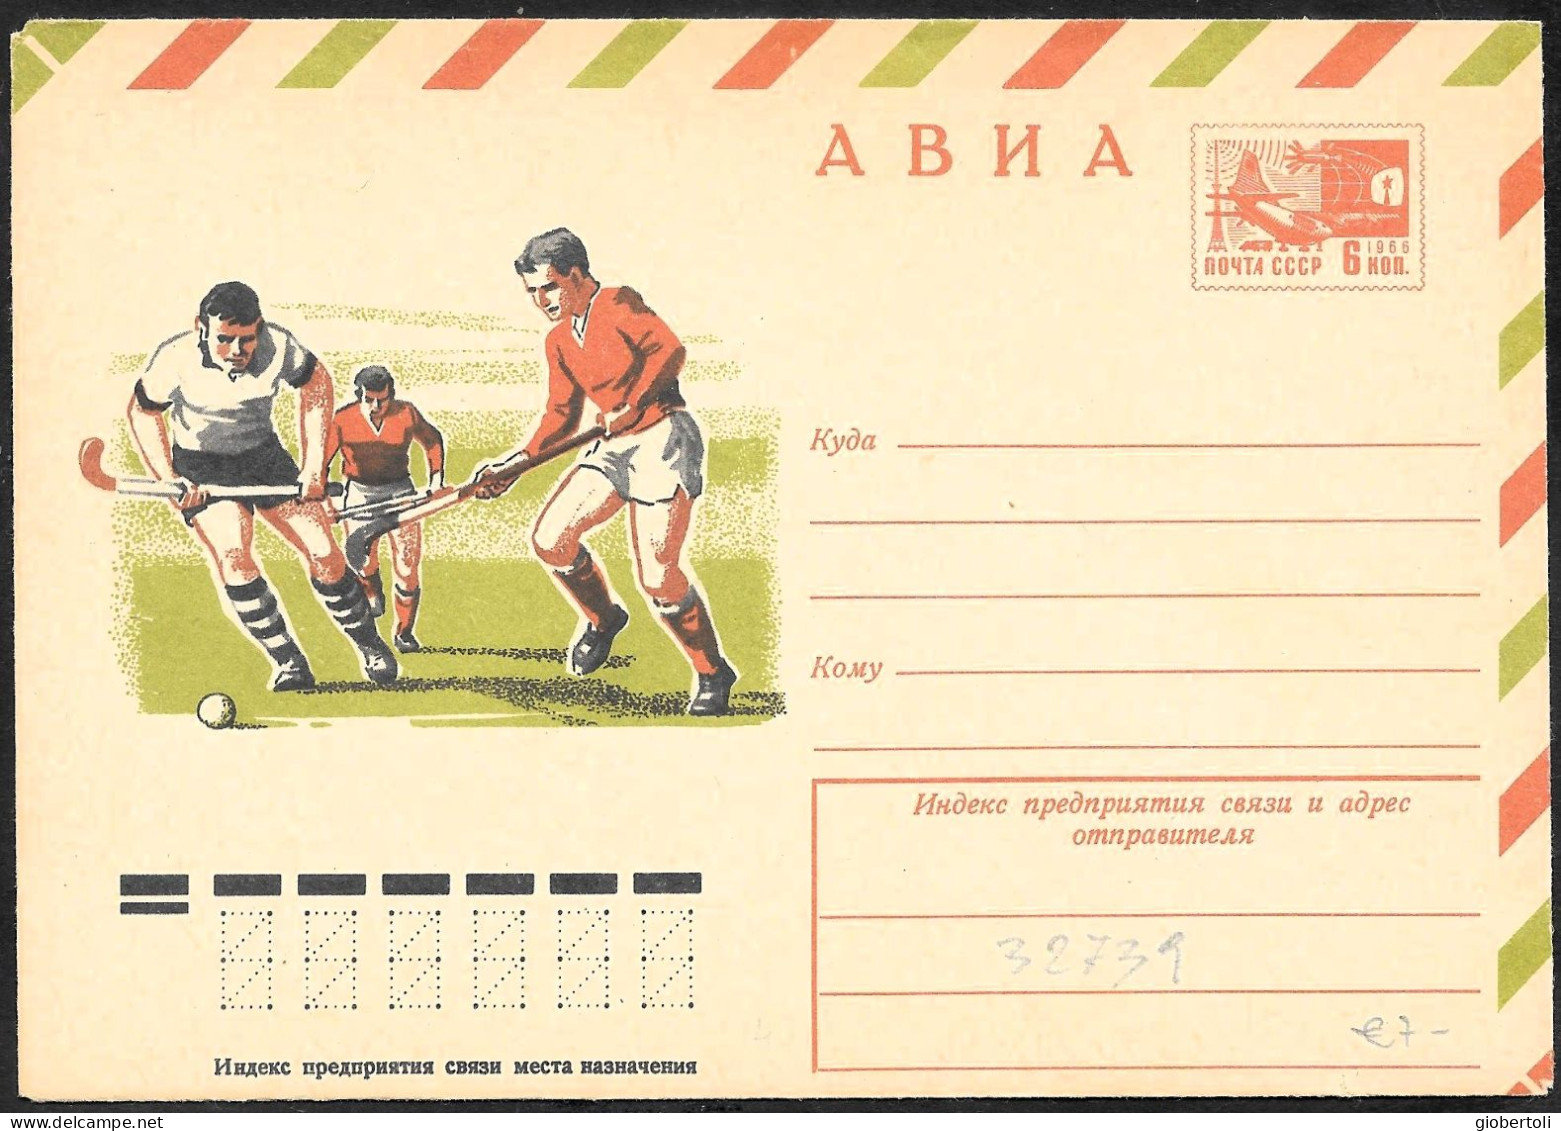 URSS: Intero, Stationery, Entier, Hockey Su Prato, Field Hockey, Hockey Sur Gazon - Hockey (su Erba)